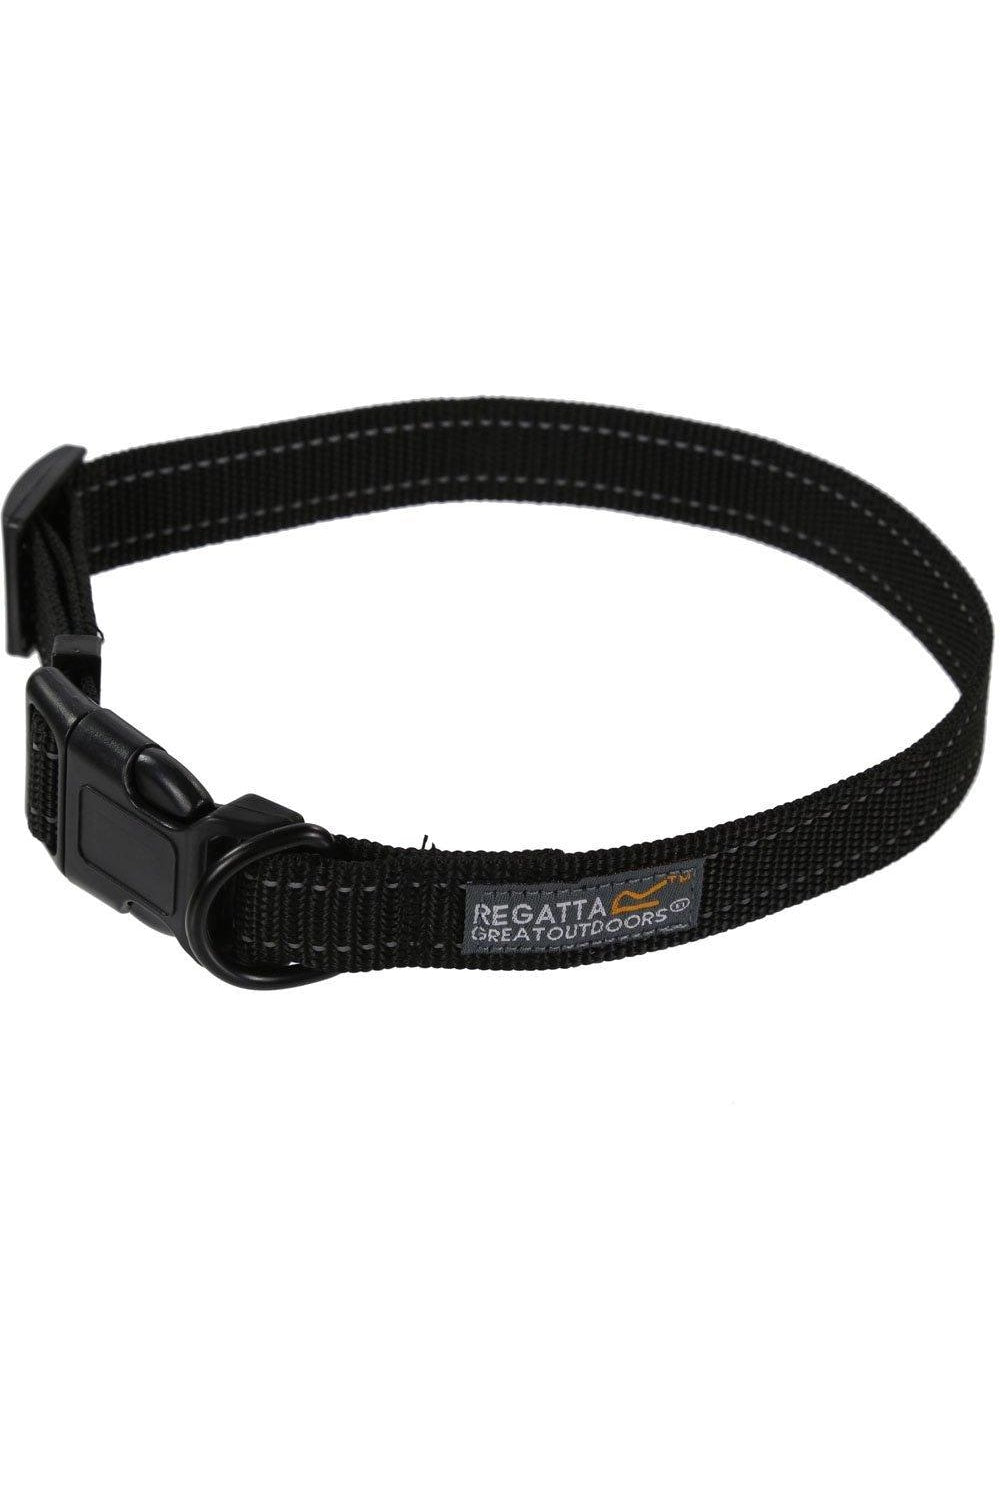 Regatta Comfort Dog Collar (Black) (12-22 Inch)